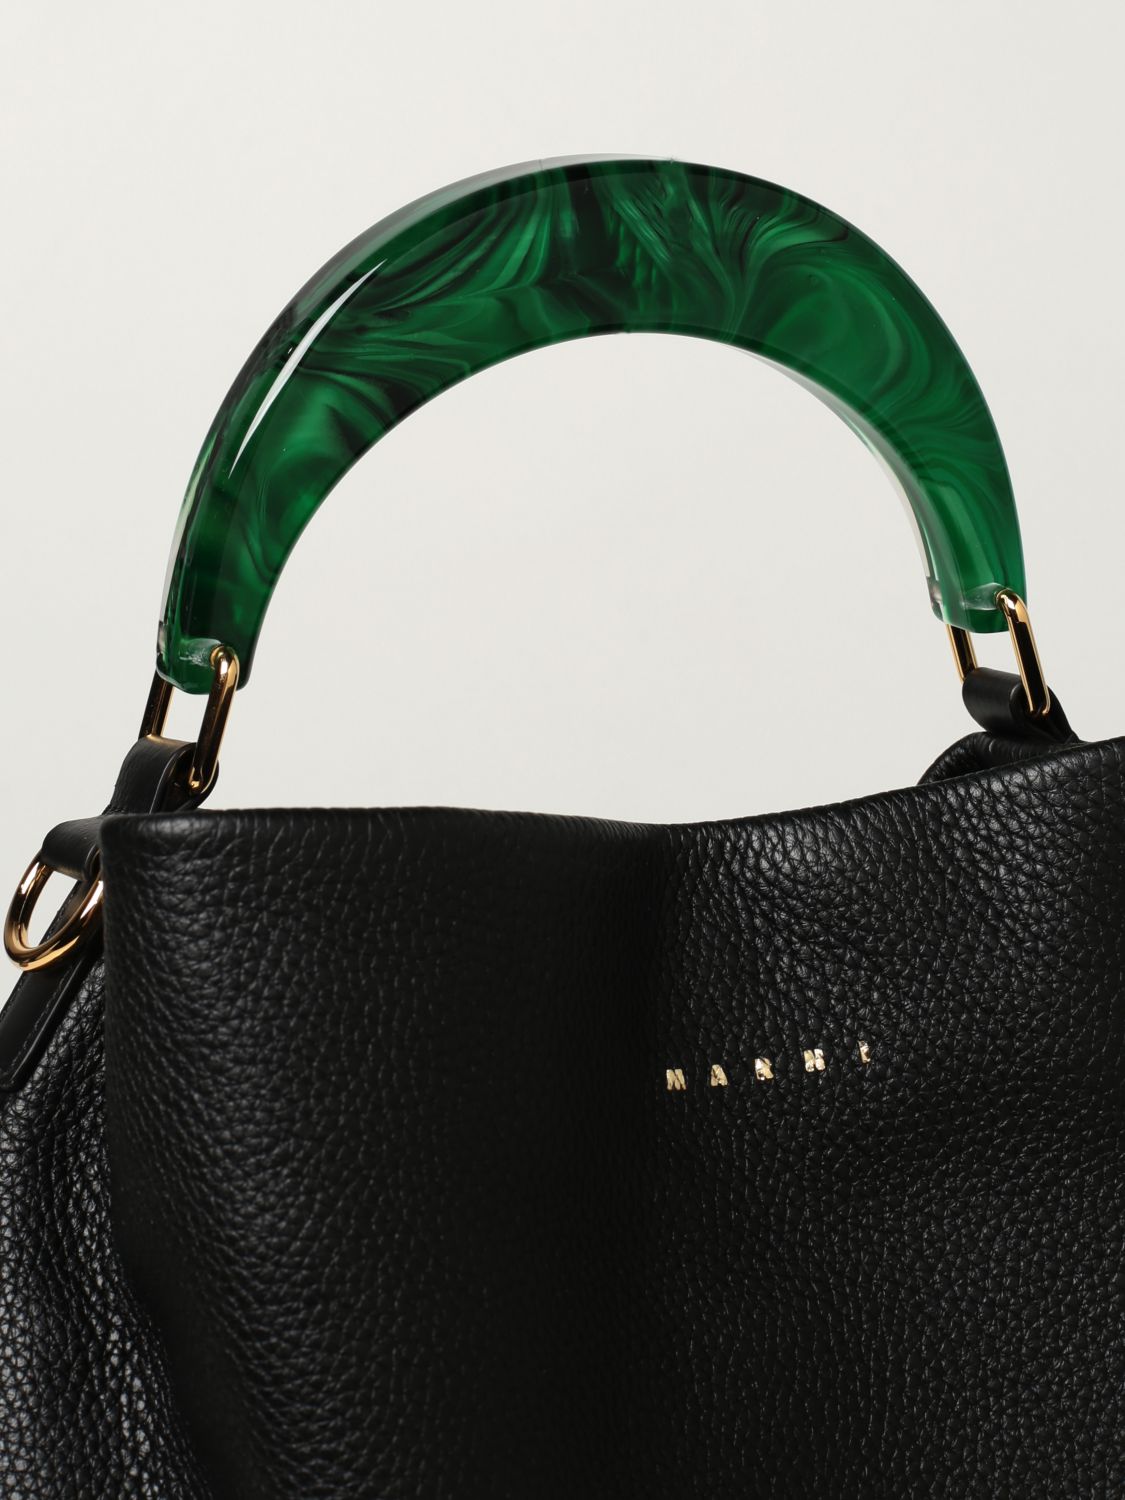 Marni leather handbag black color buy on Cheap Latin-american-cam